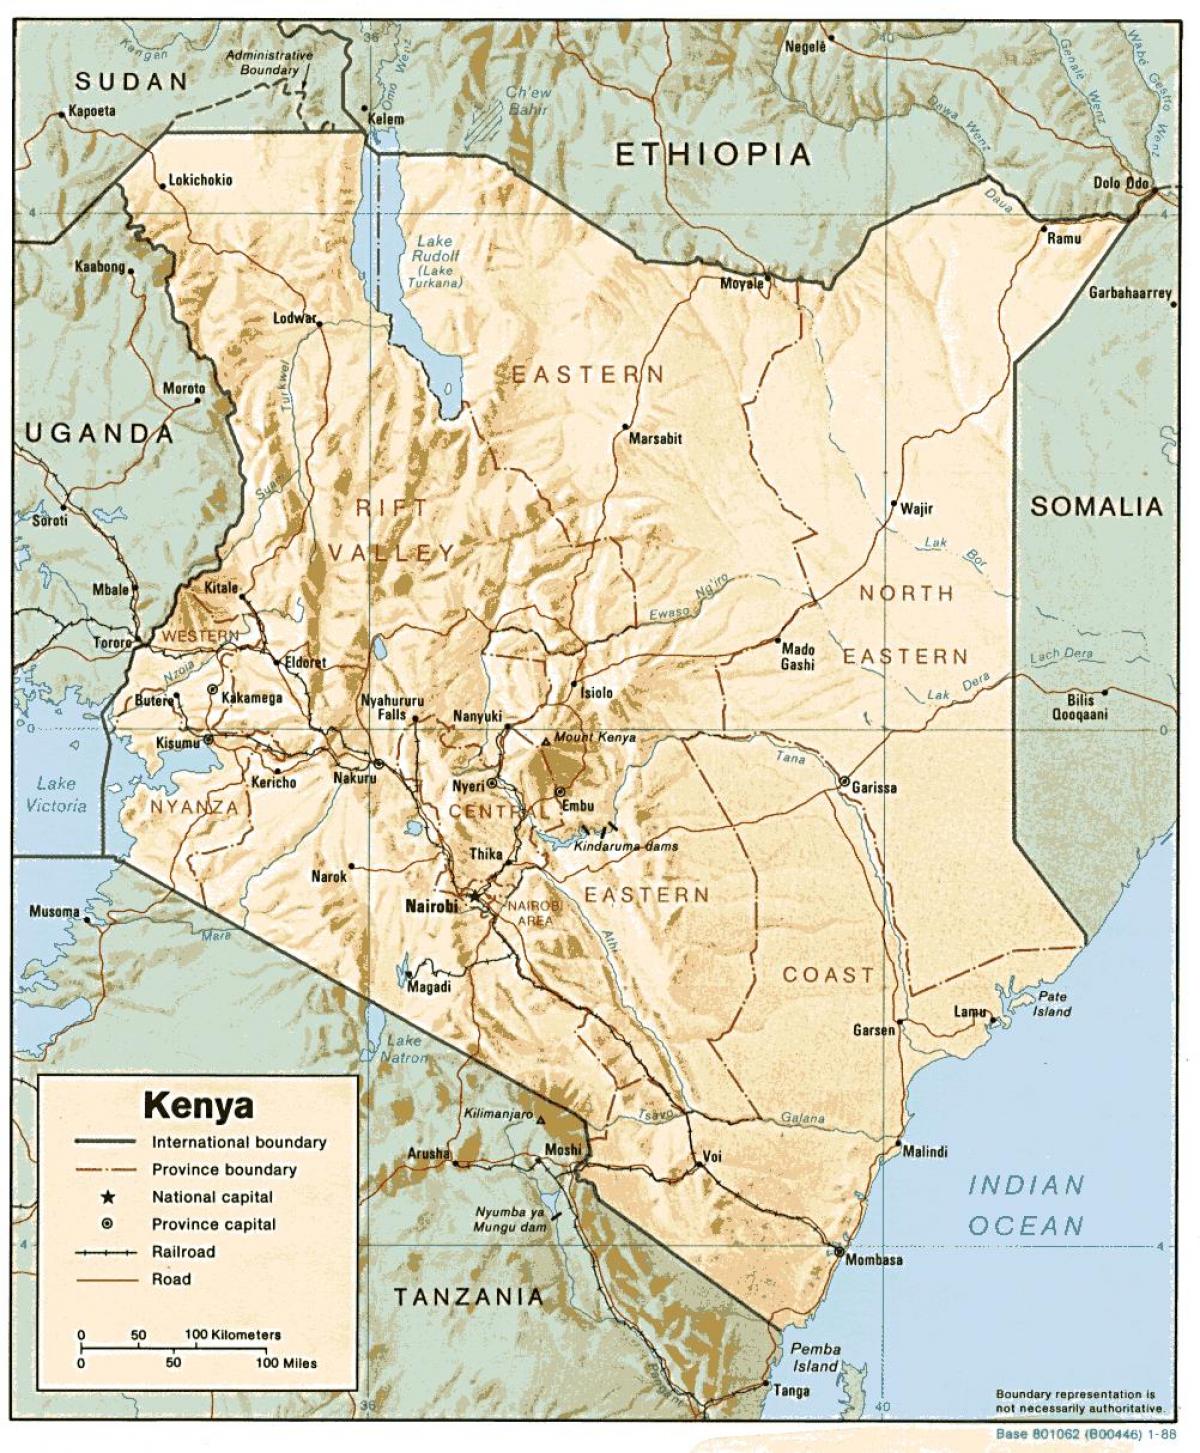 kart over Kenya viser større byer